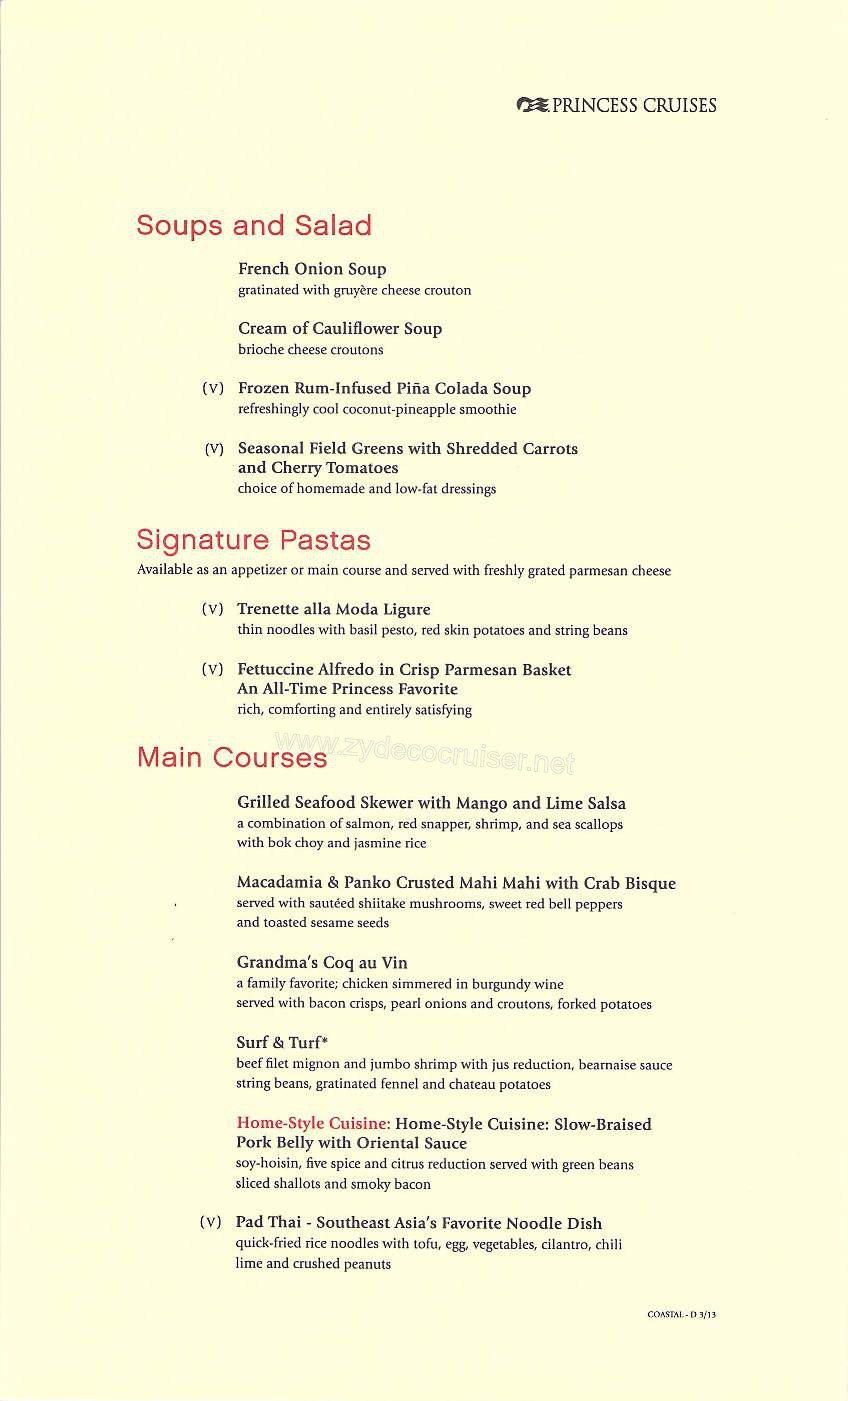 018: Golden Princess Coastal Cruise, MDR Dinner, Dinner Menu 2, Page 2